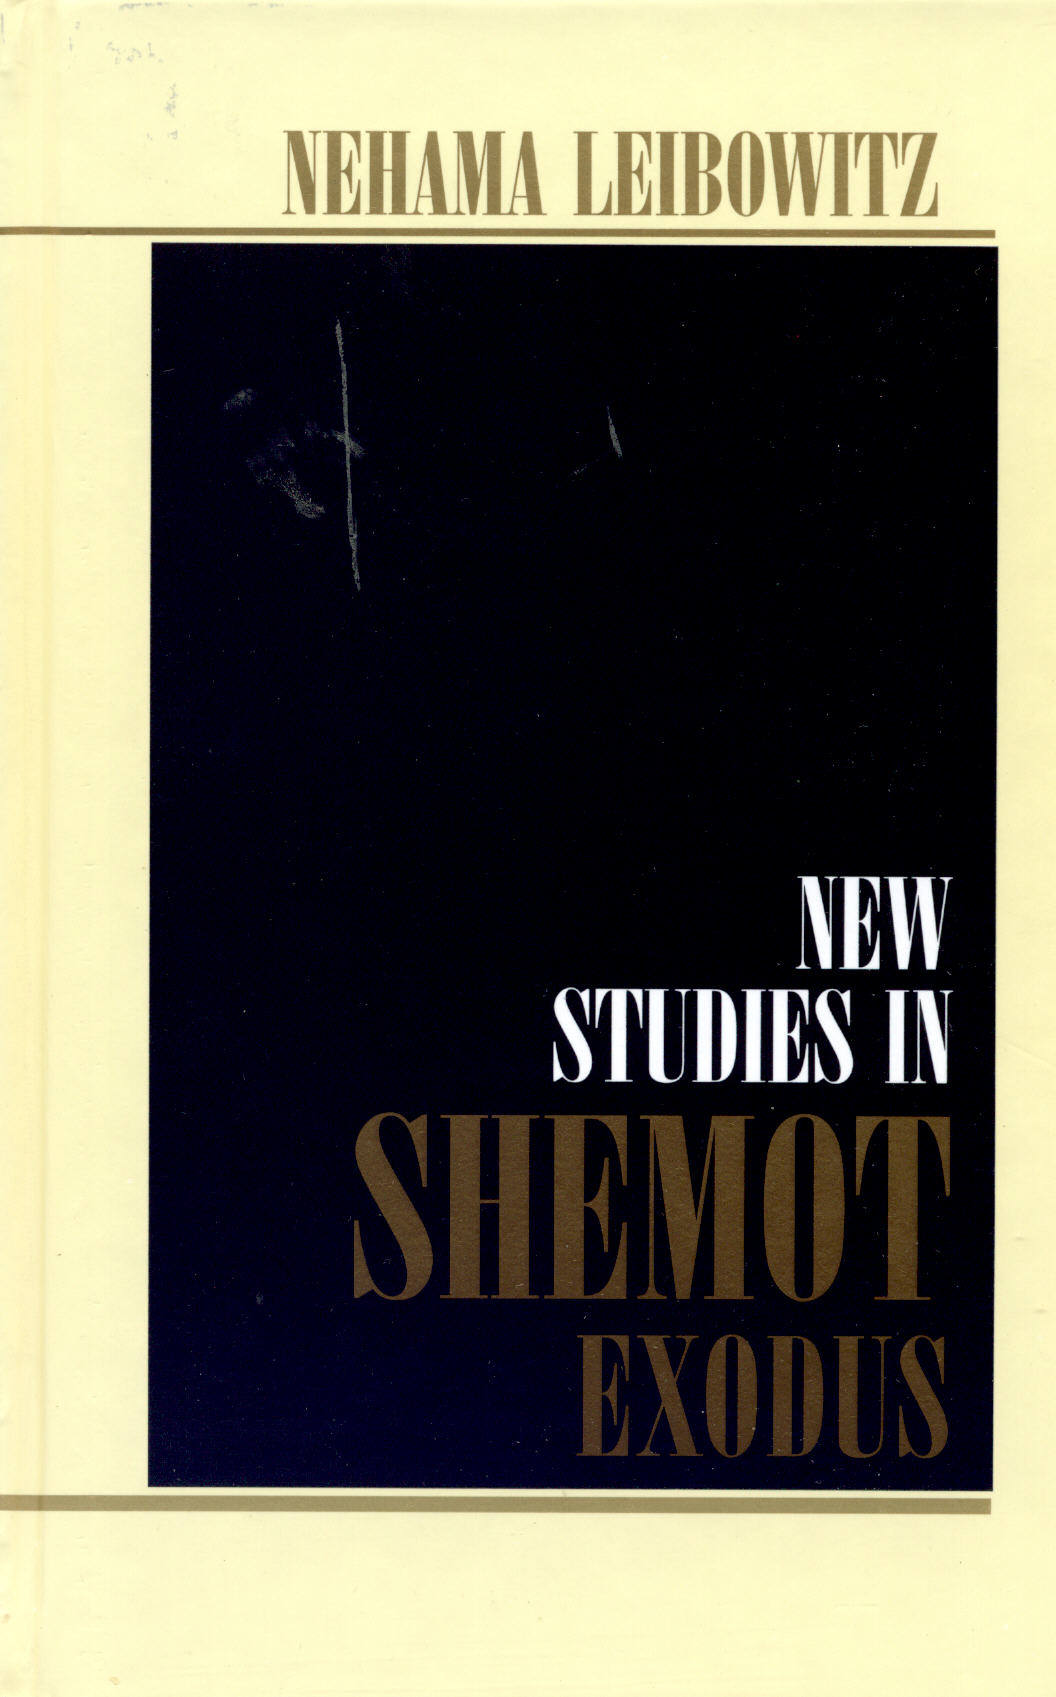 New Studies in Shemot (Exodus)